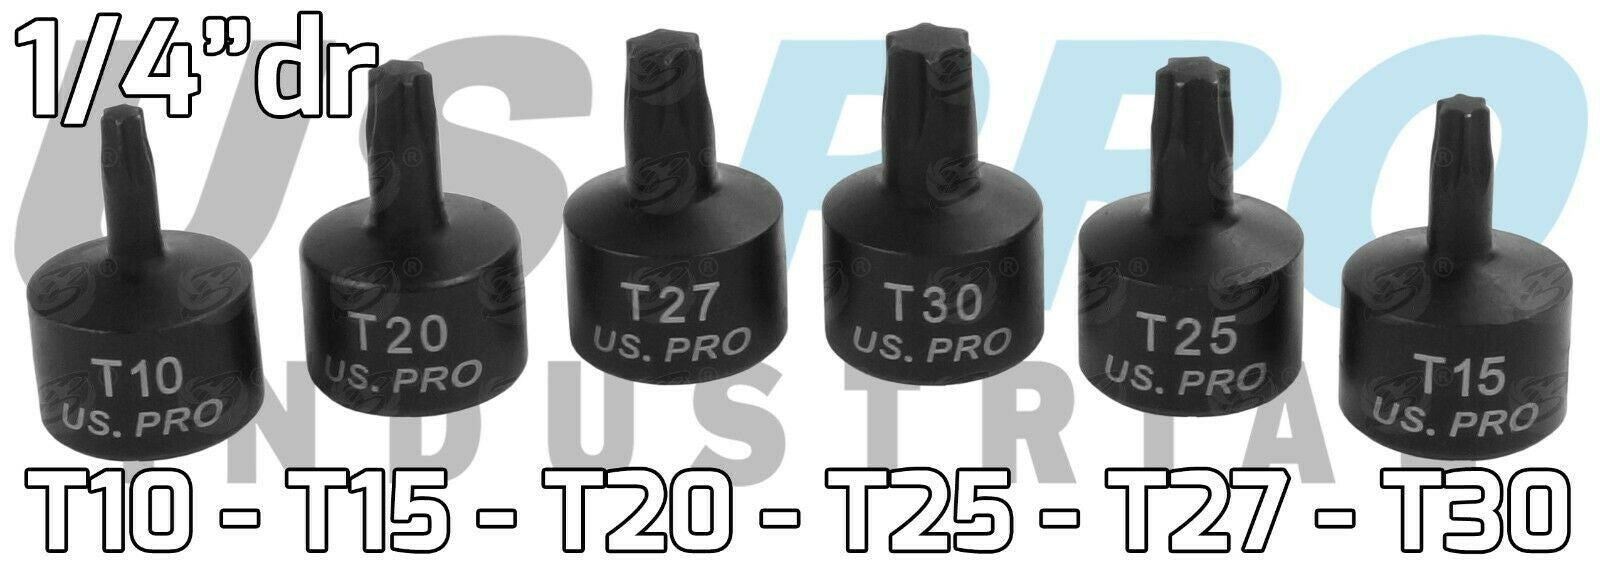 US PRO 10PCS 1/4" & 3/8" DRIVE STUBBY IMPACT TORX BIT SOCKETS T10 - T50